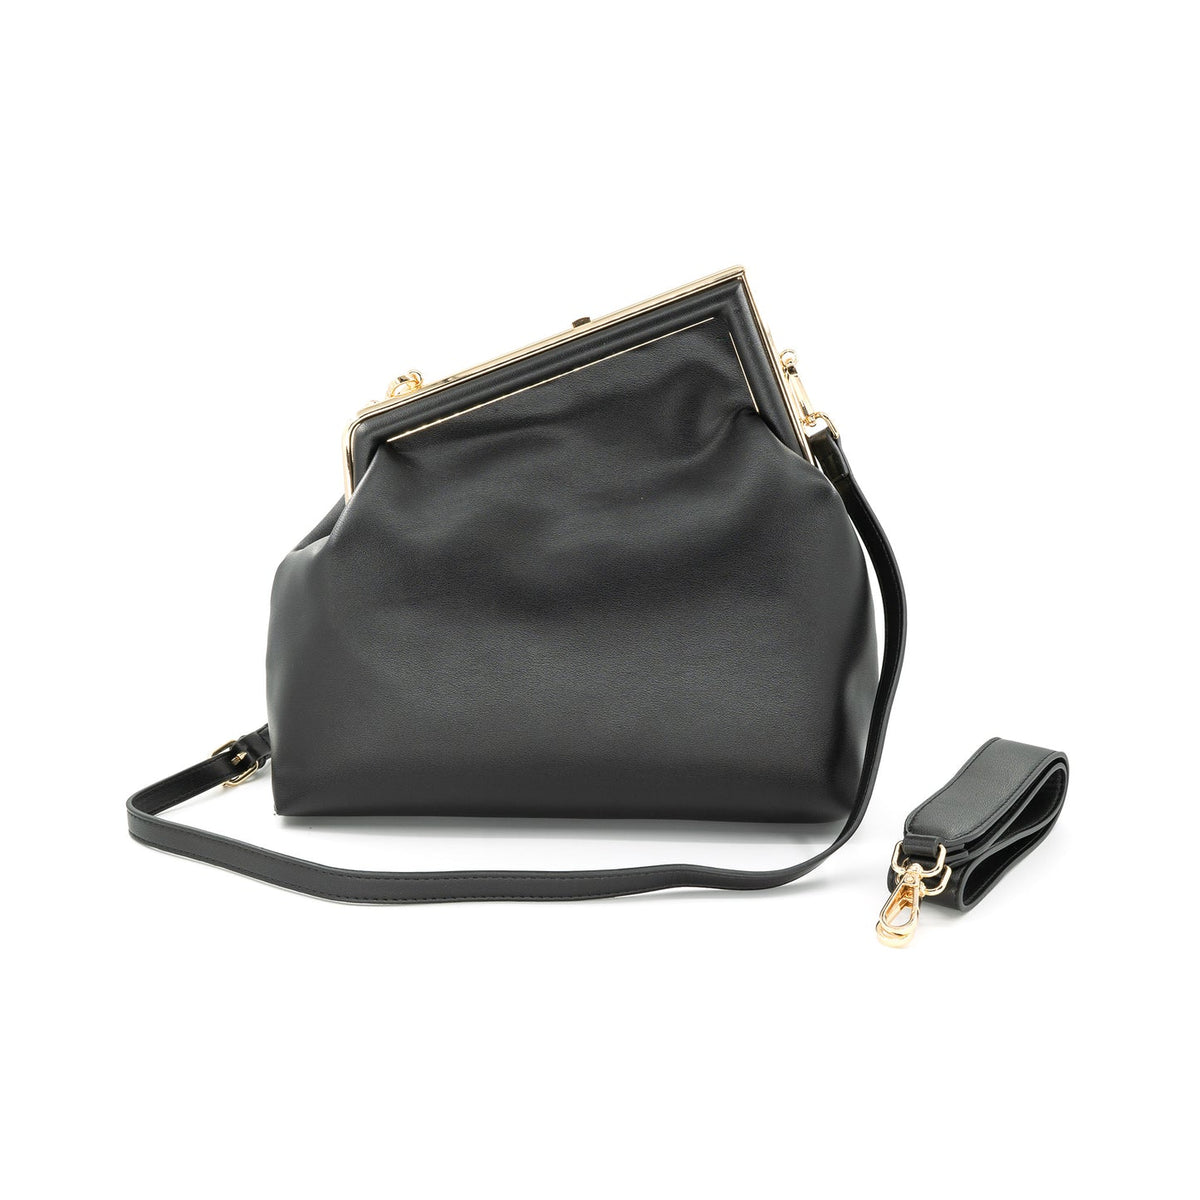 Alana Fendi Style Vegan Leather Oversize Frame Bag